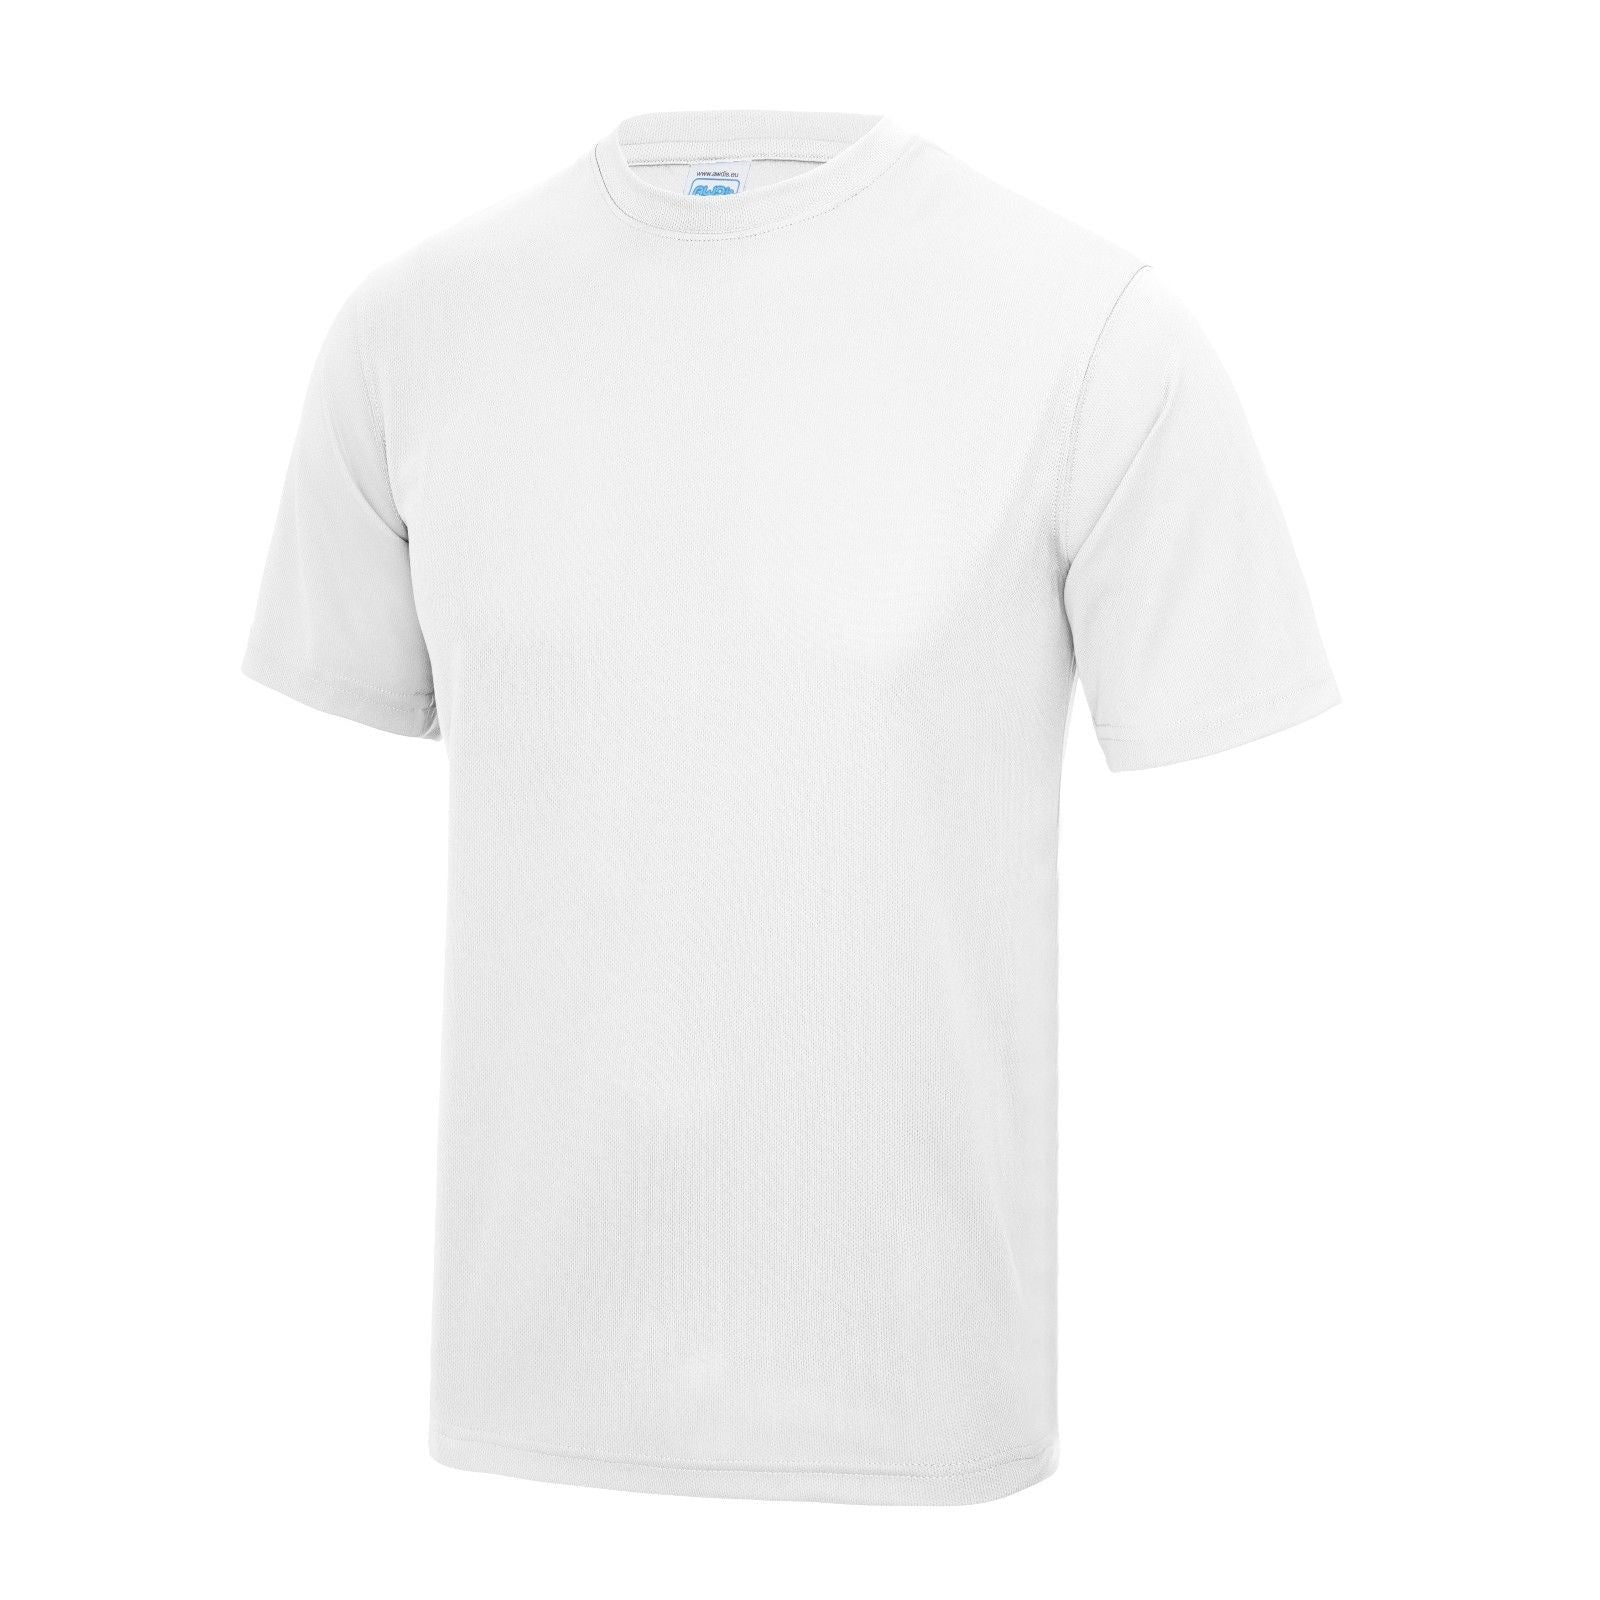 Large White Sports T shirt - choose logo